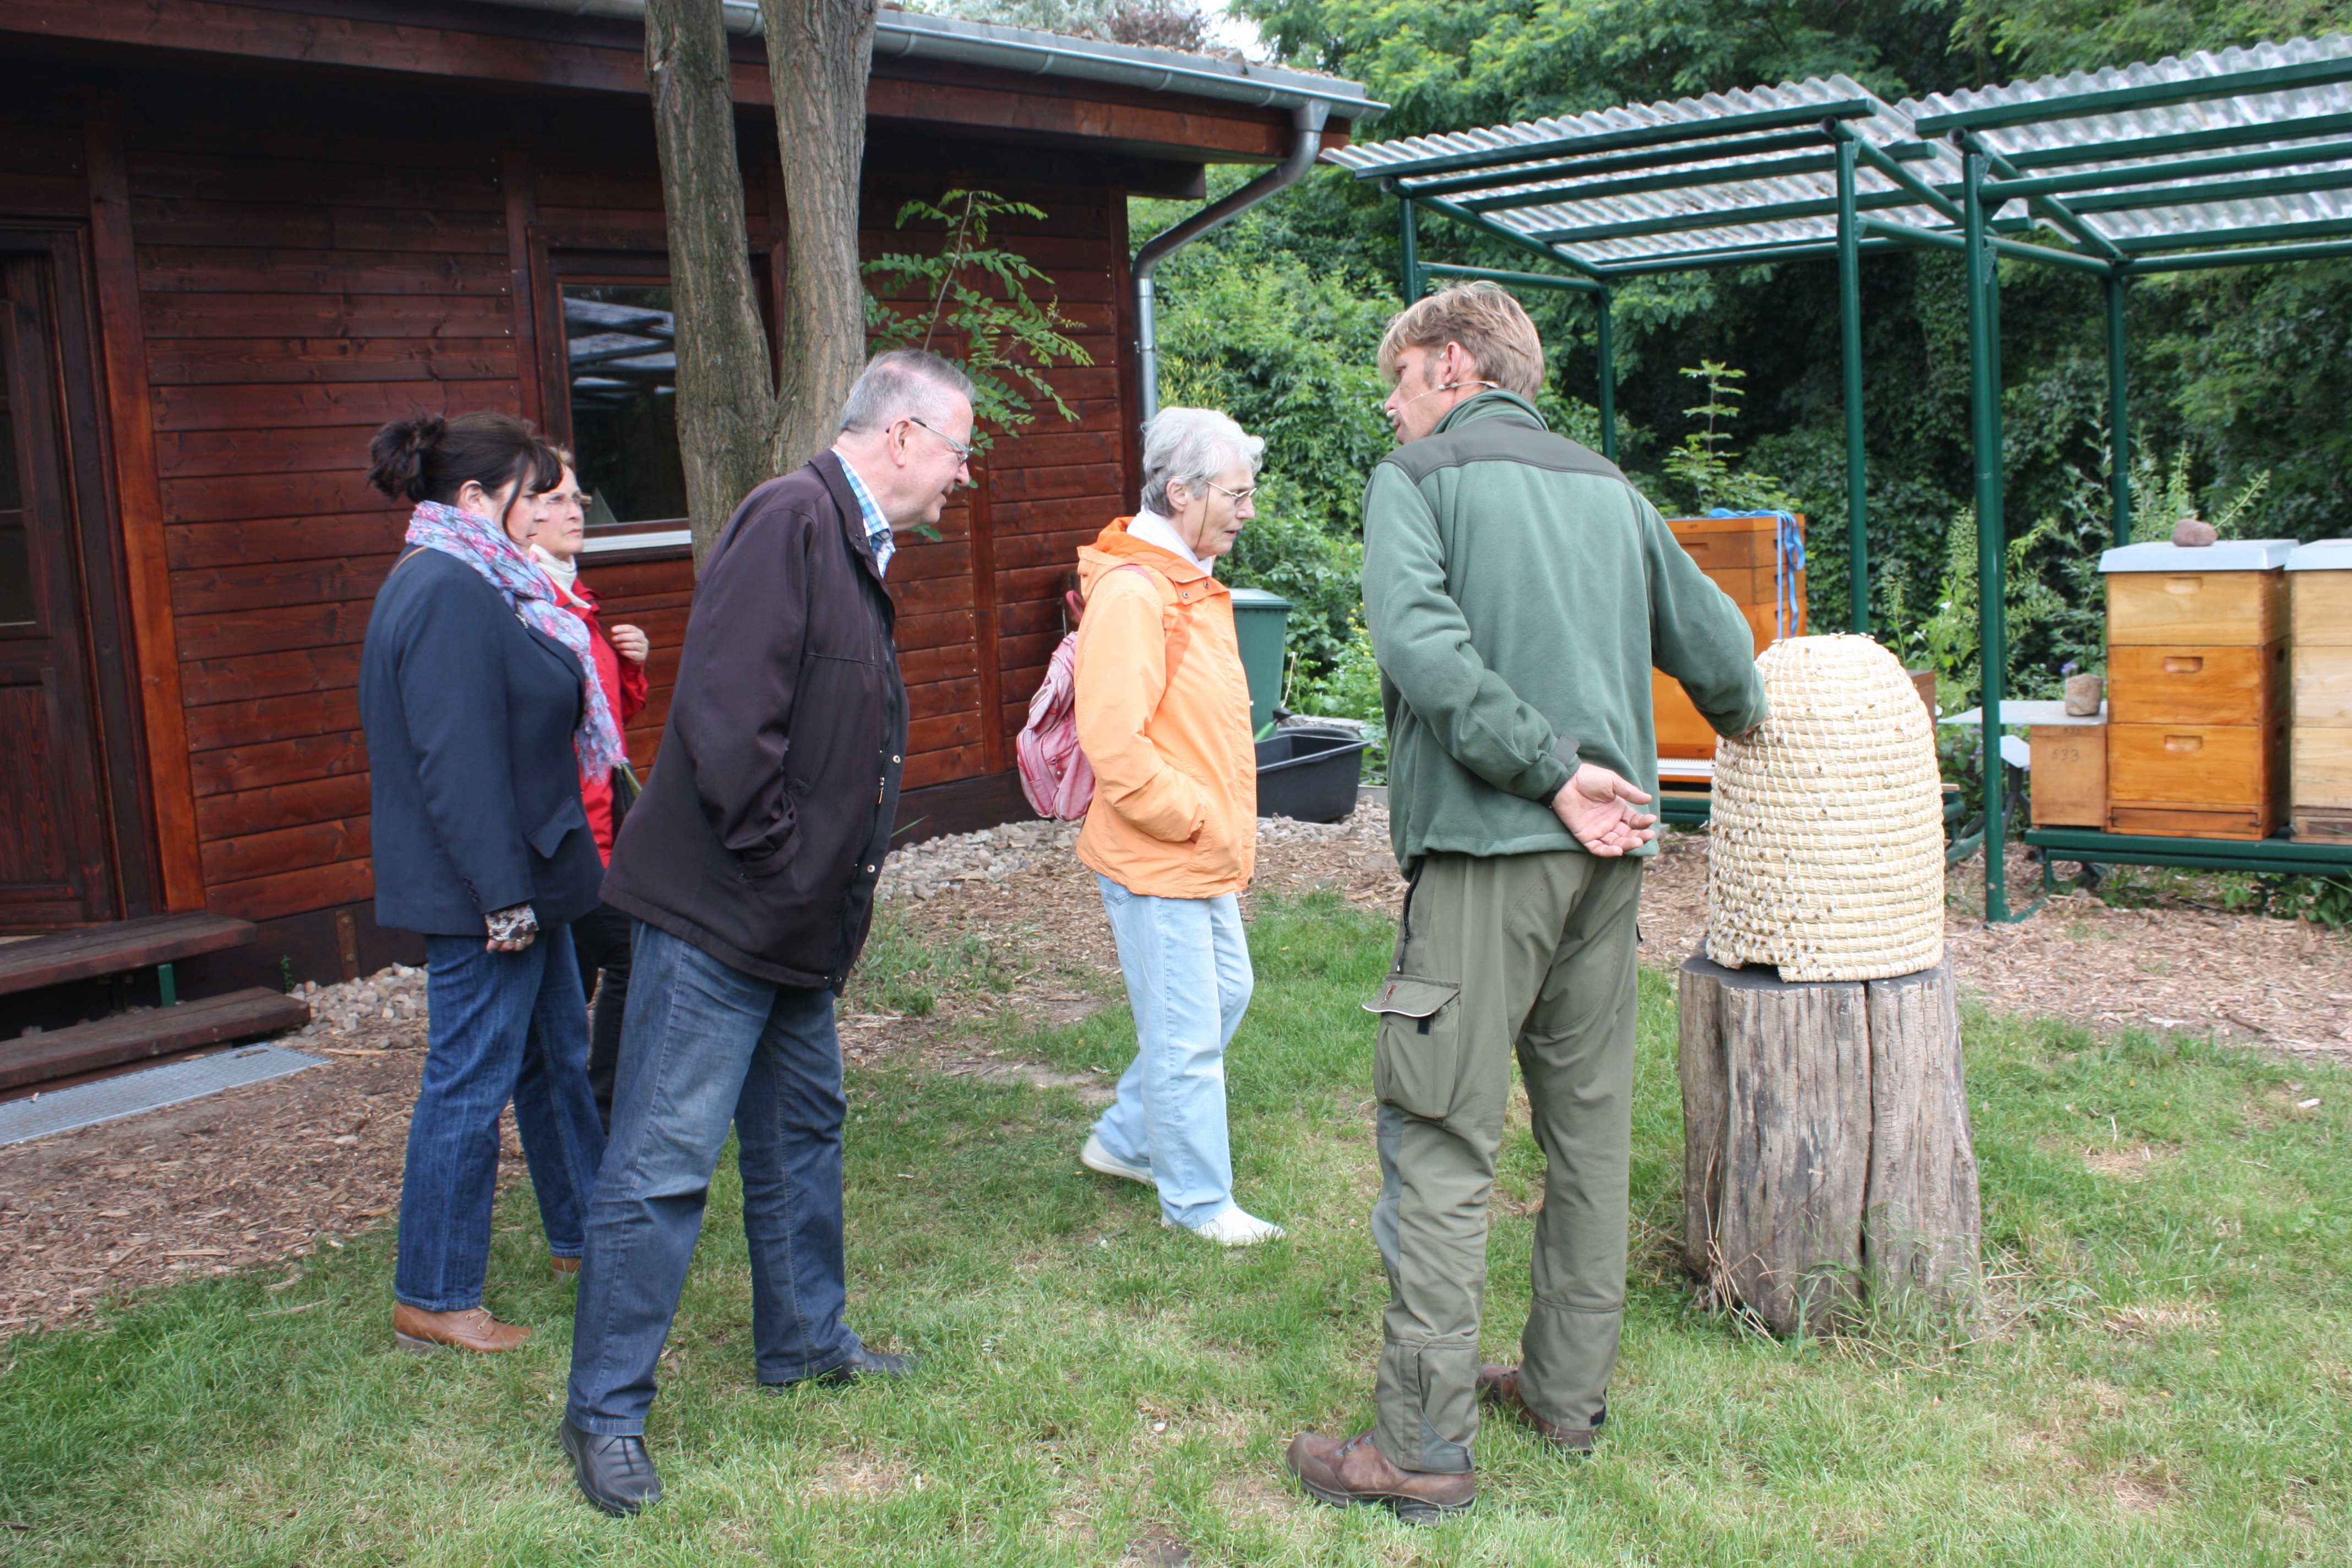 Naturranger Herr Lindner zeigt den neugierigen BesucherInnen die Bienen